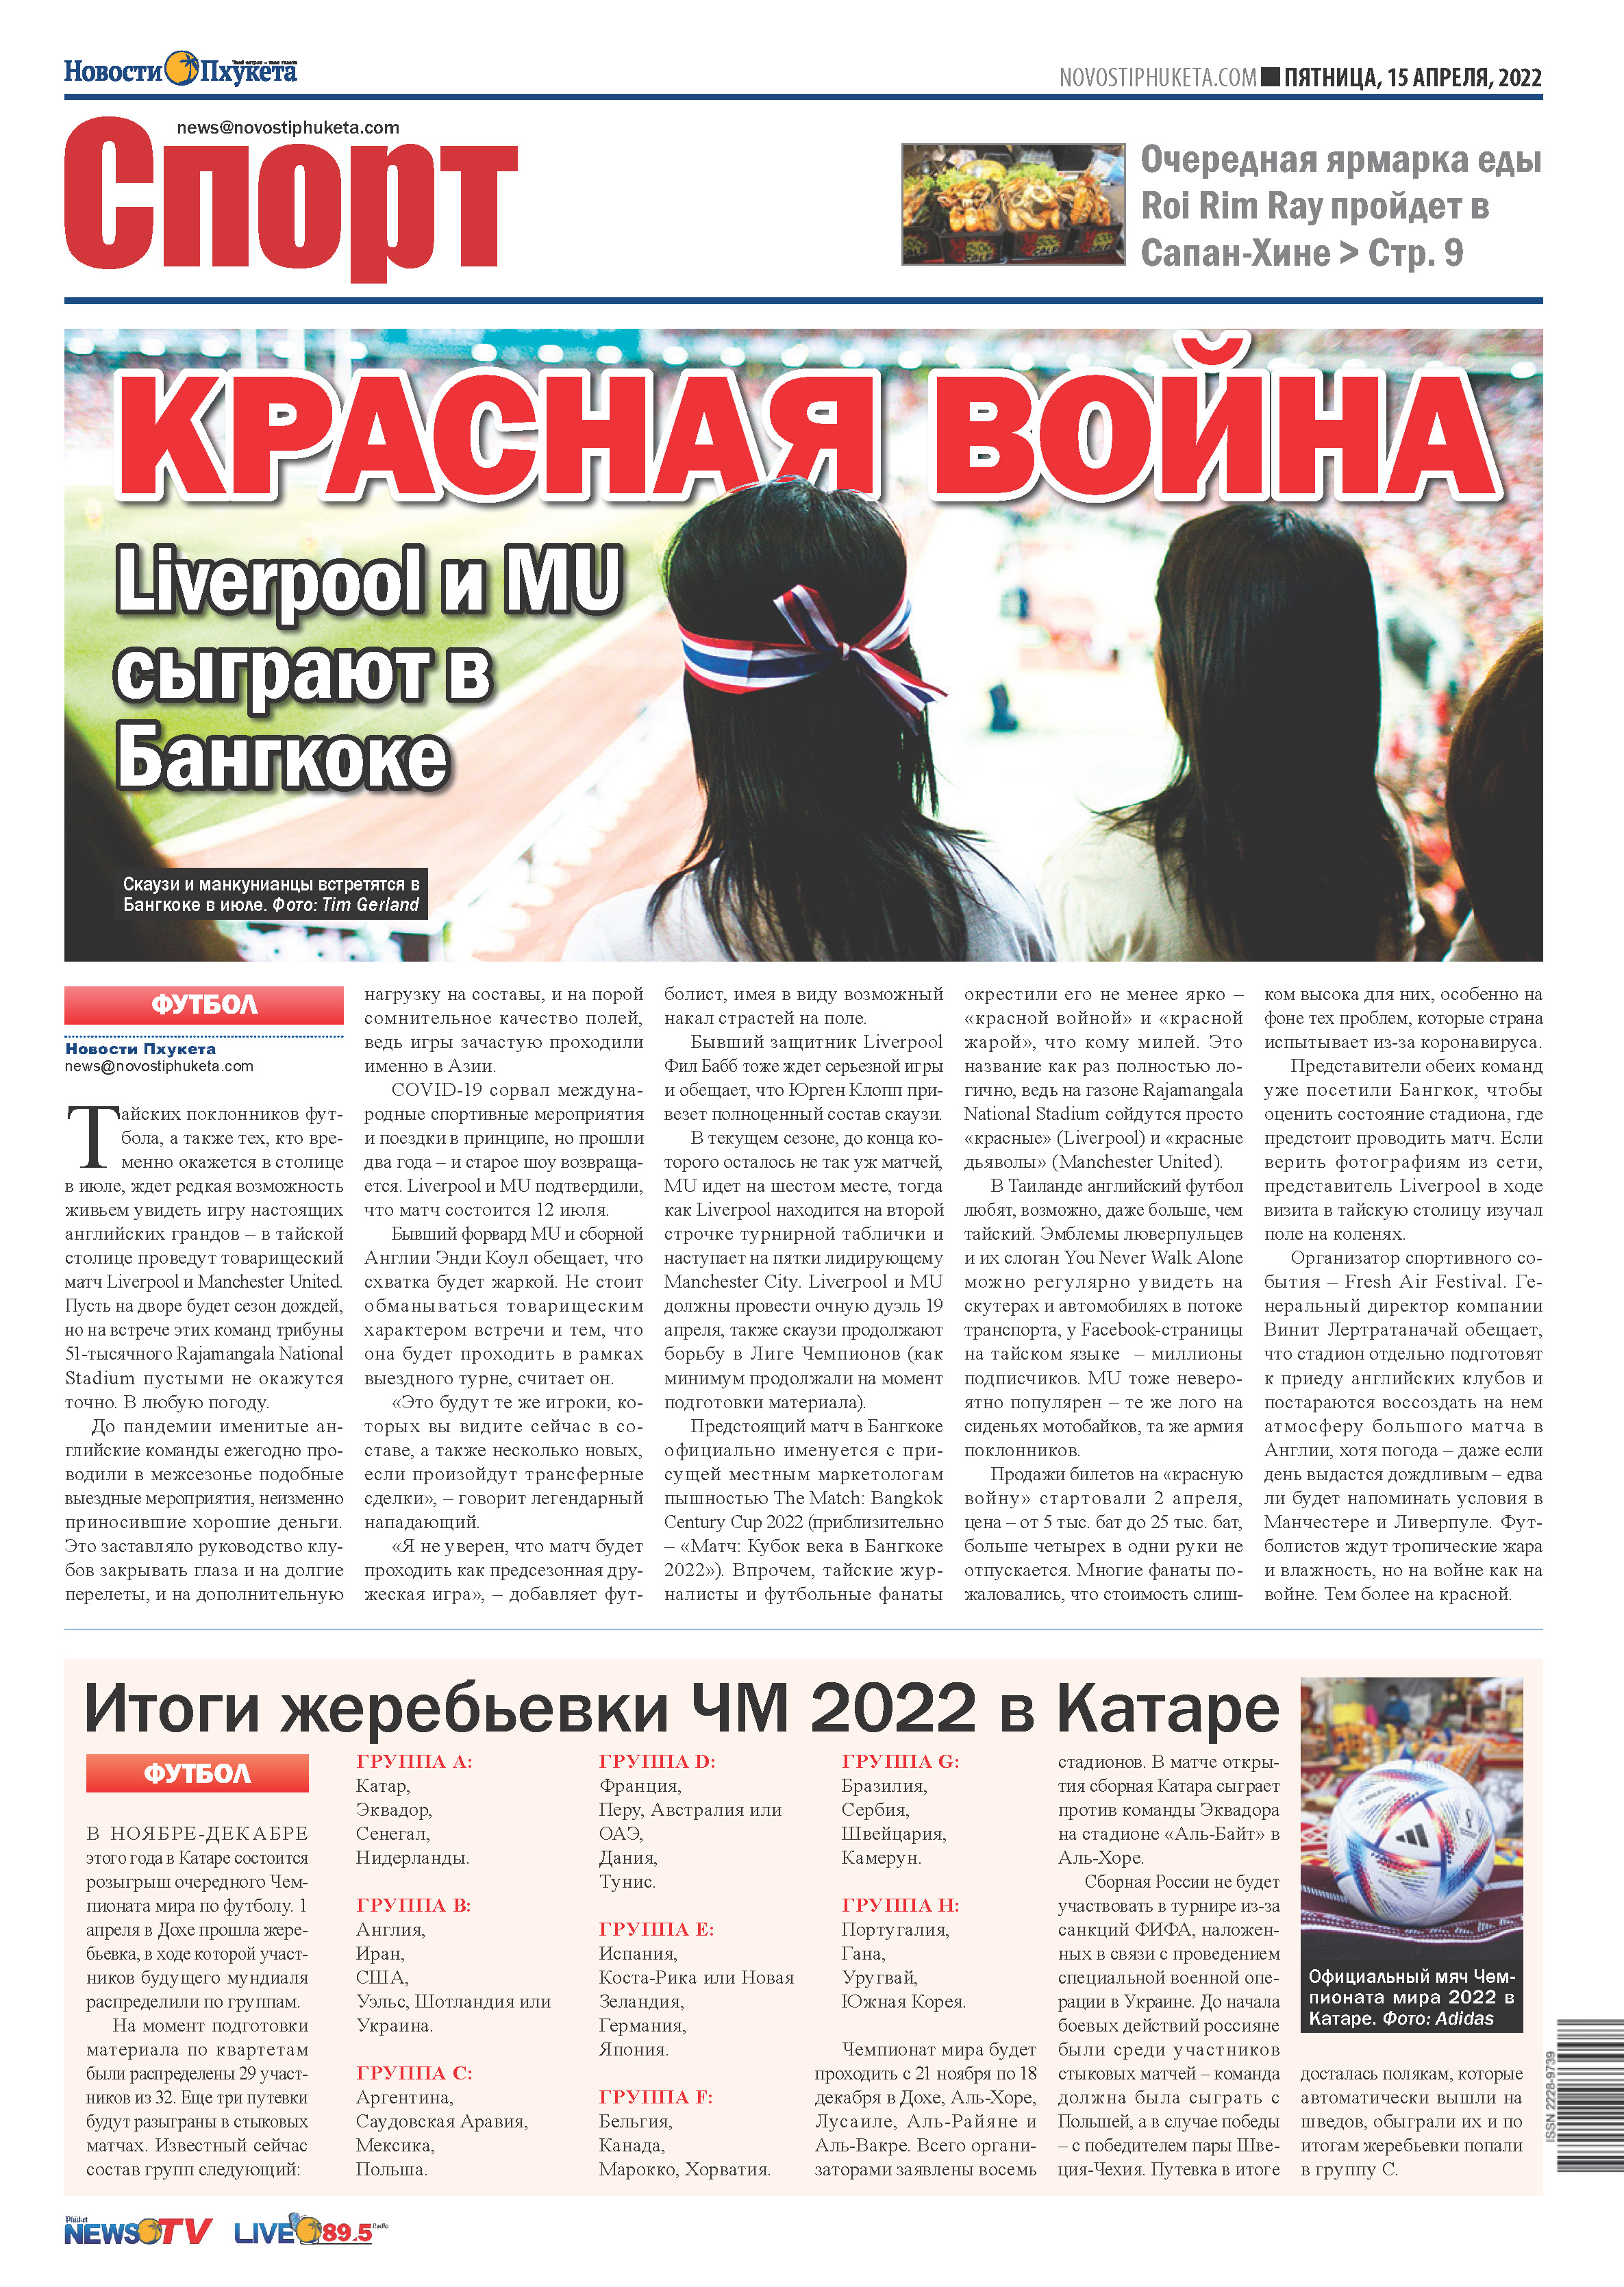 Phuket Newspaper - https://www.novostiphuketa.com/archive/15-04-2022/15-04-2022_Page_12.jpg